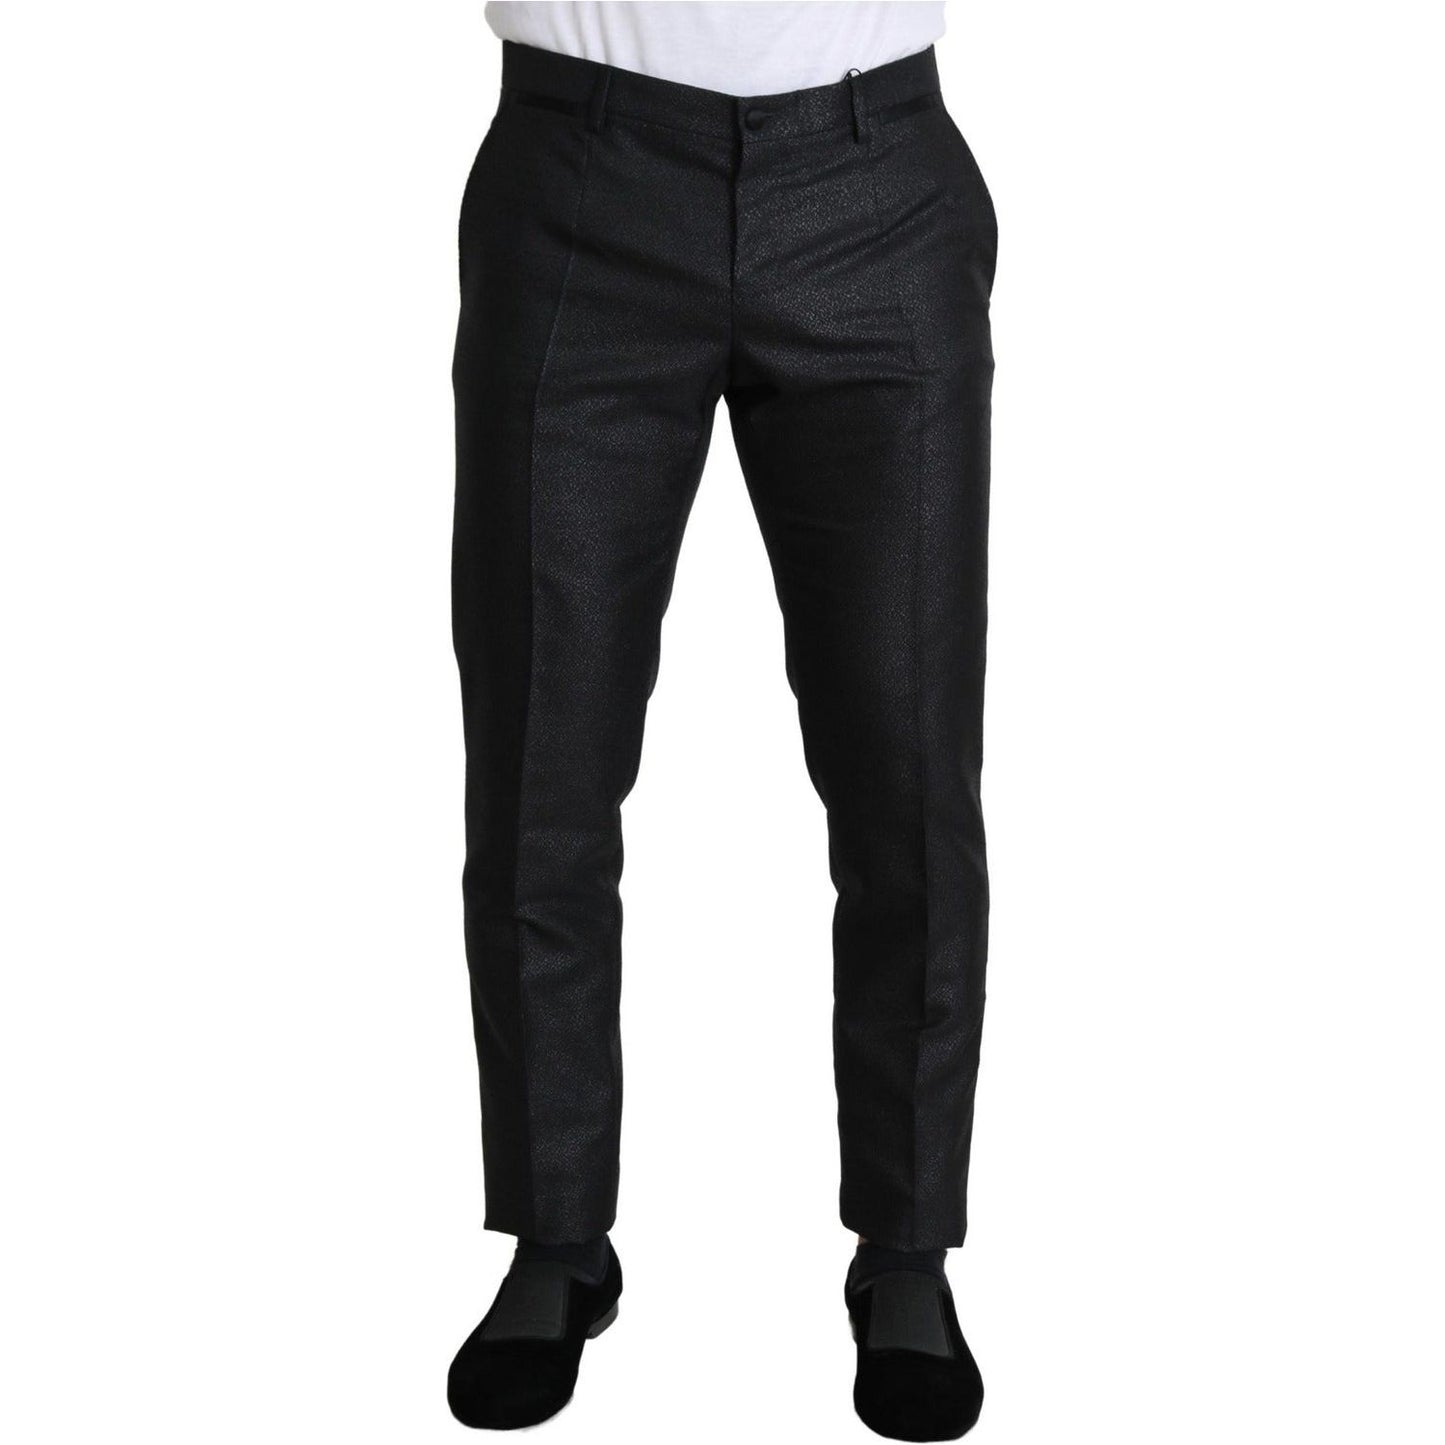 Dolce & Gabbana Elegant Metallic Black Dress Pants black-metallic-skinny-trouser-dress Jeans & Pants IMG_2238-scaled-0c474af6-3fd.jpg